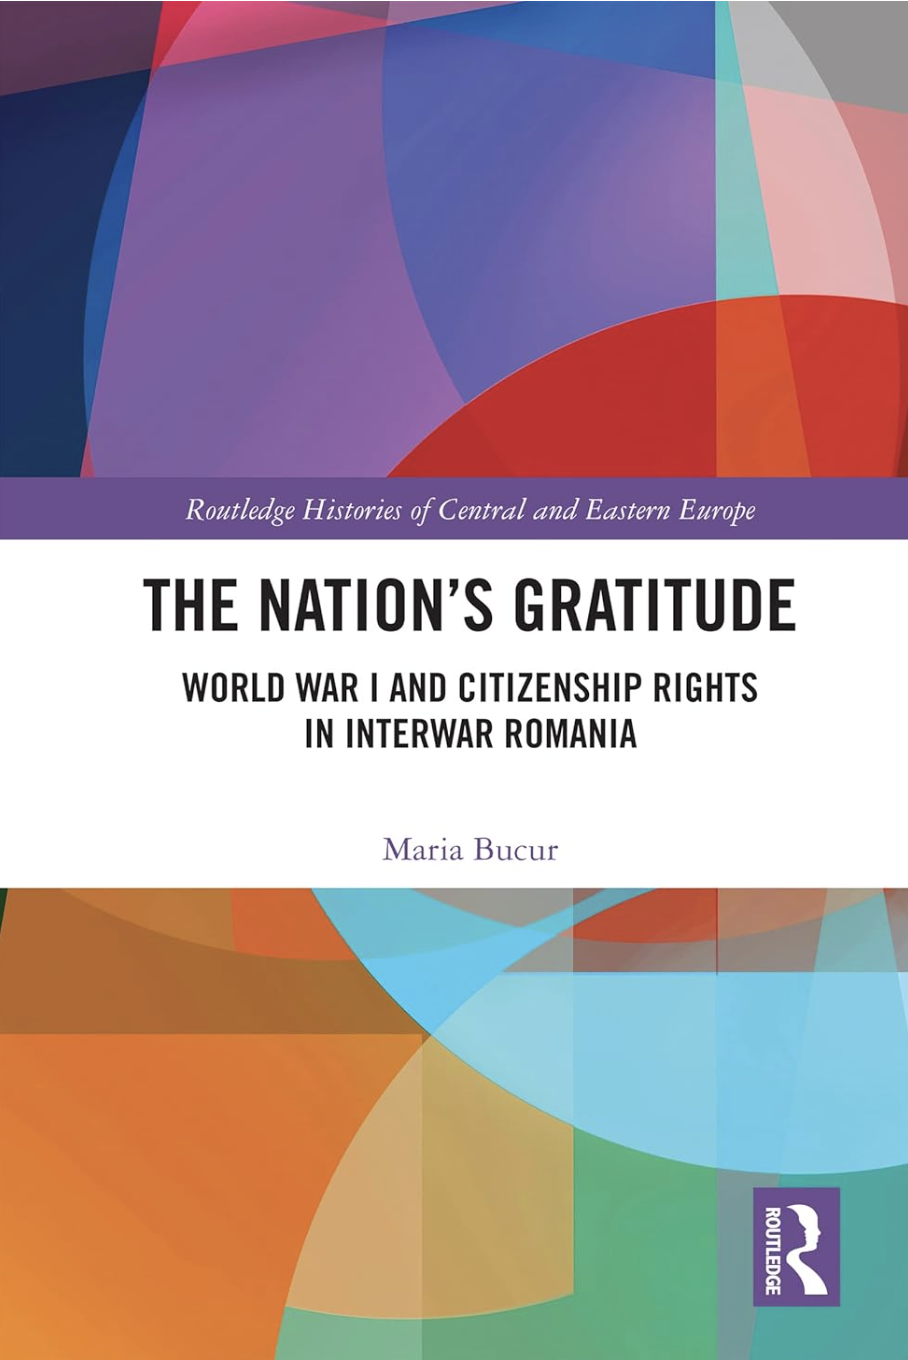 The Nation's Gratitude: World War I and Citizenship Rights in Interwar Romania